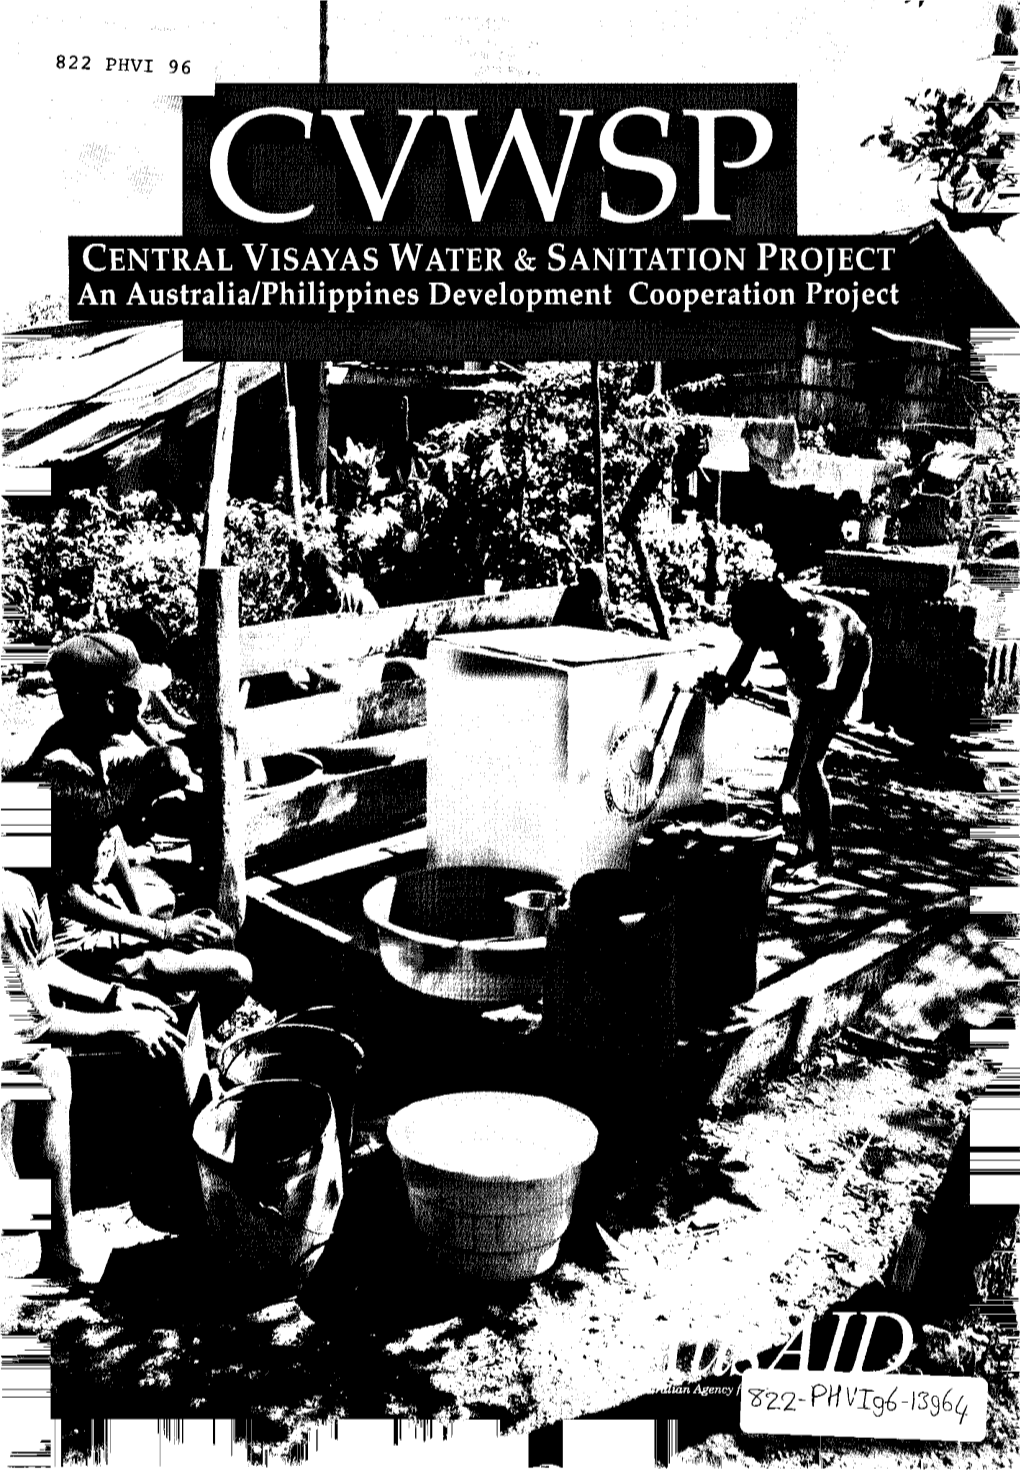 CENTRAL VISAYAS WATER & SANITATION PROJECT An